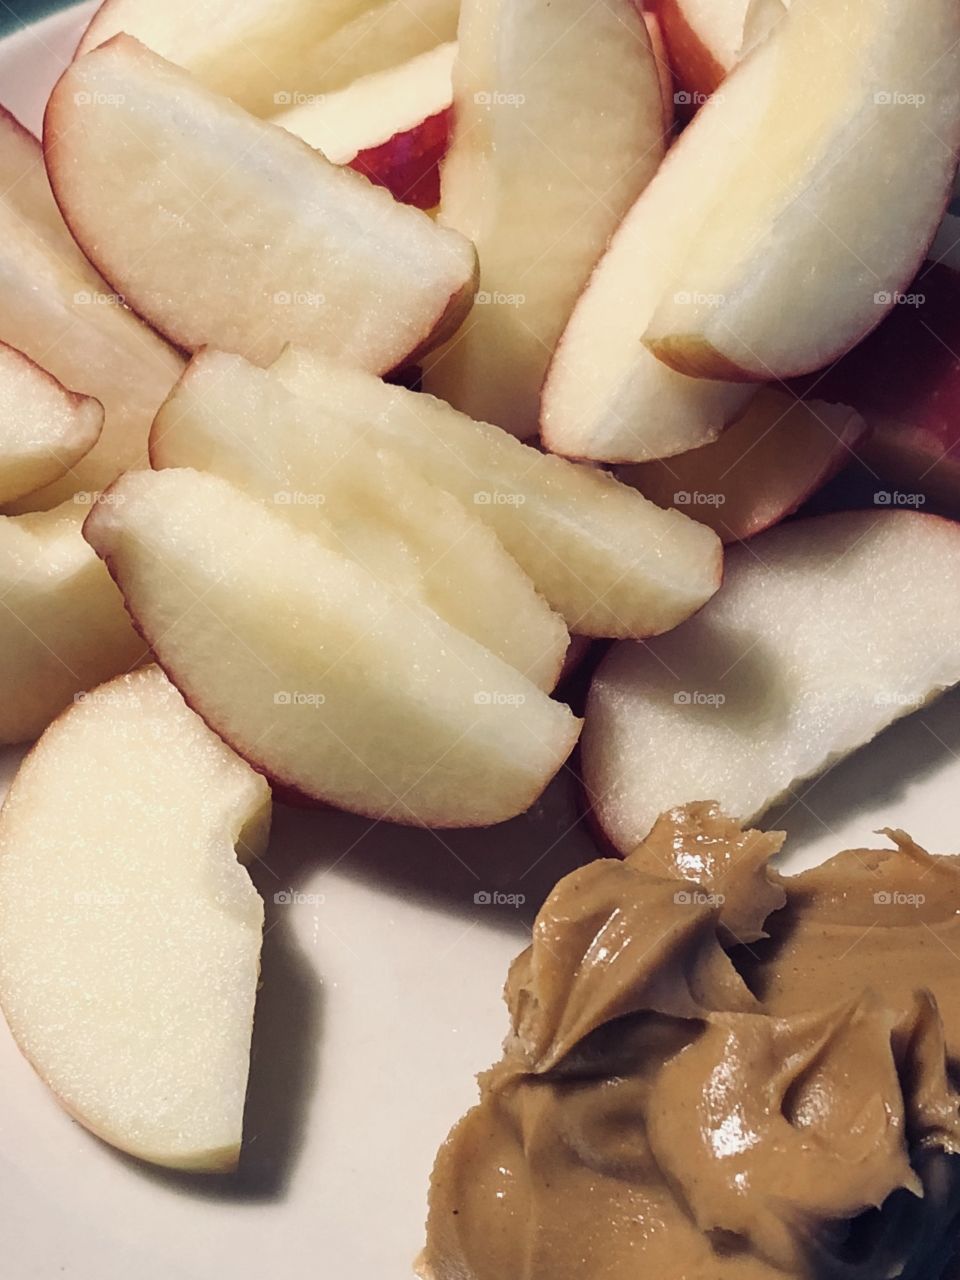 Crisp Apple Slices With Creamy Peanut Butter